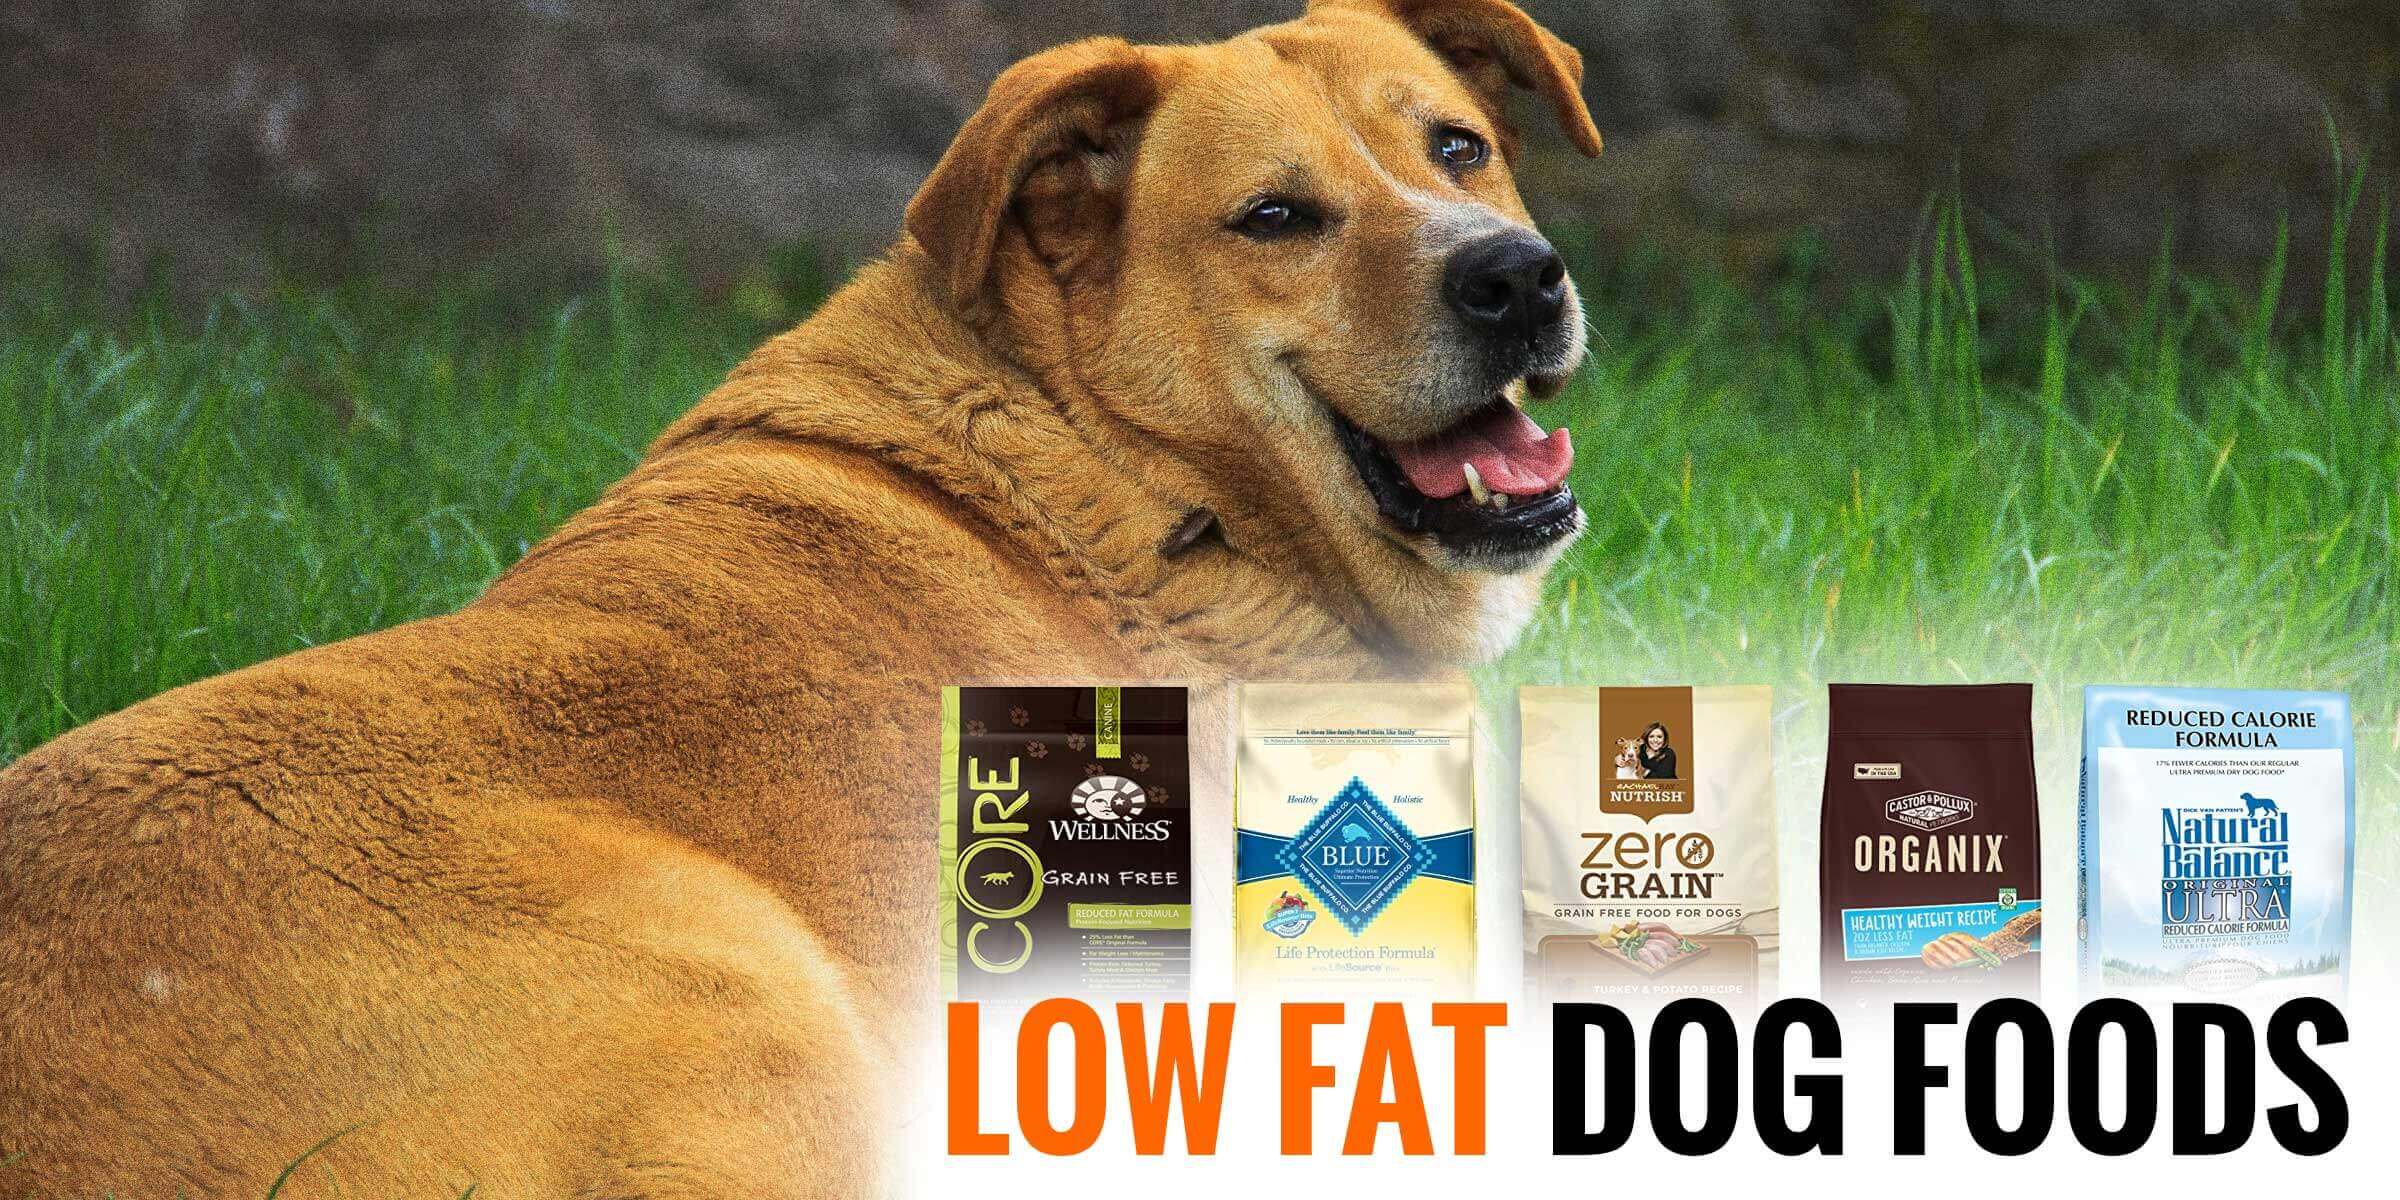 low calorie dog food